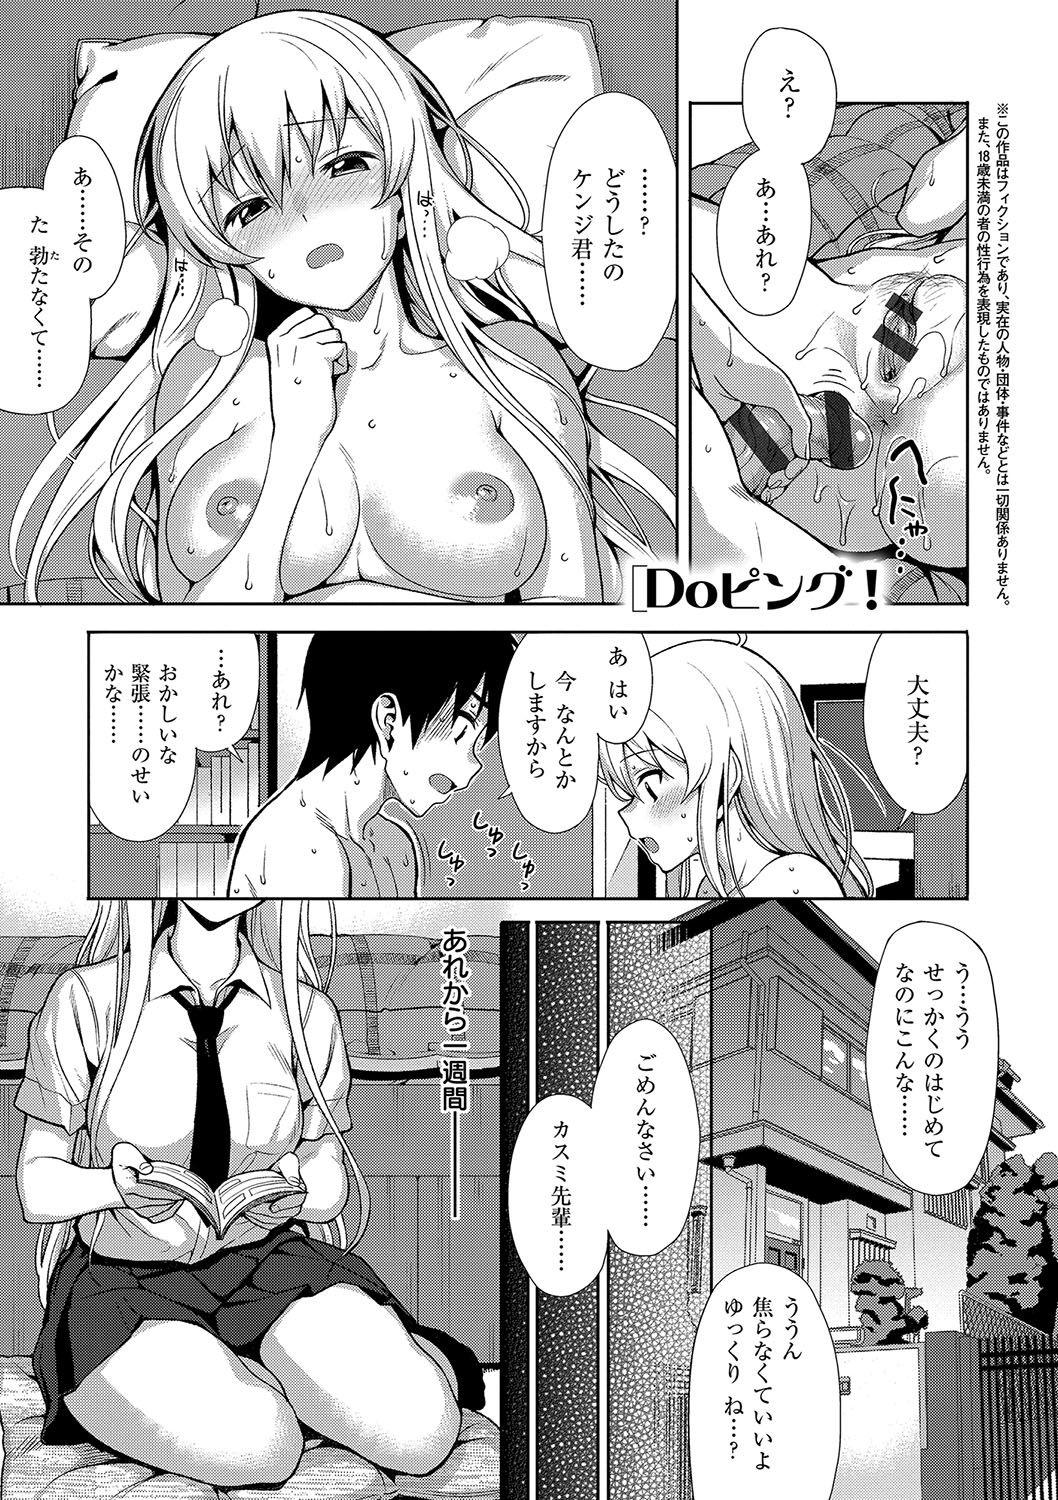 Star Koinaka plus Gagging - Page 4